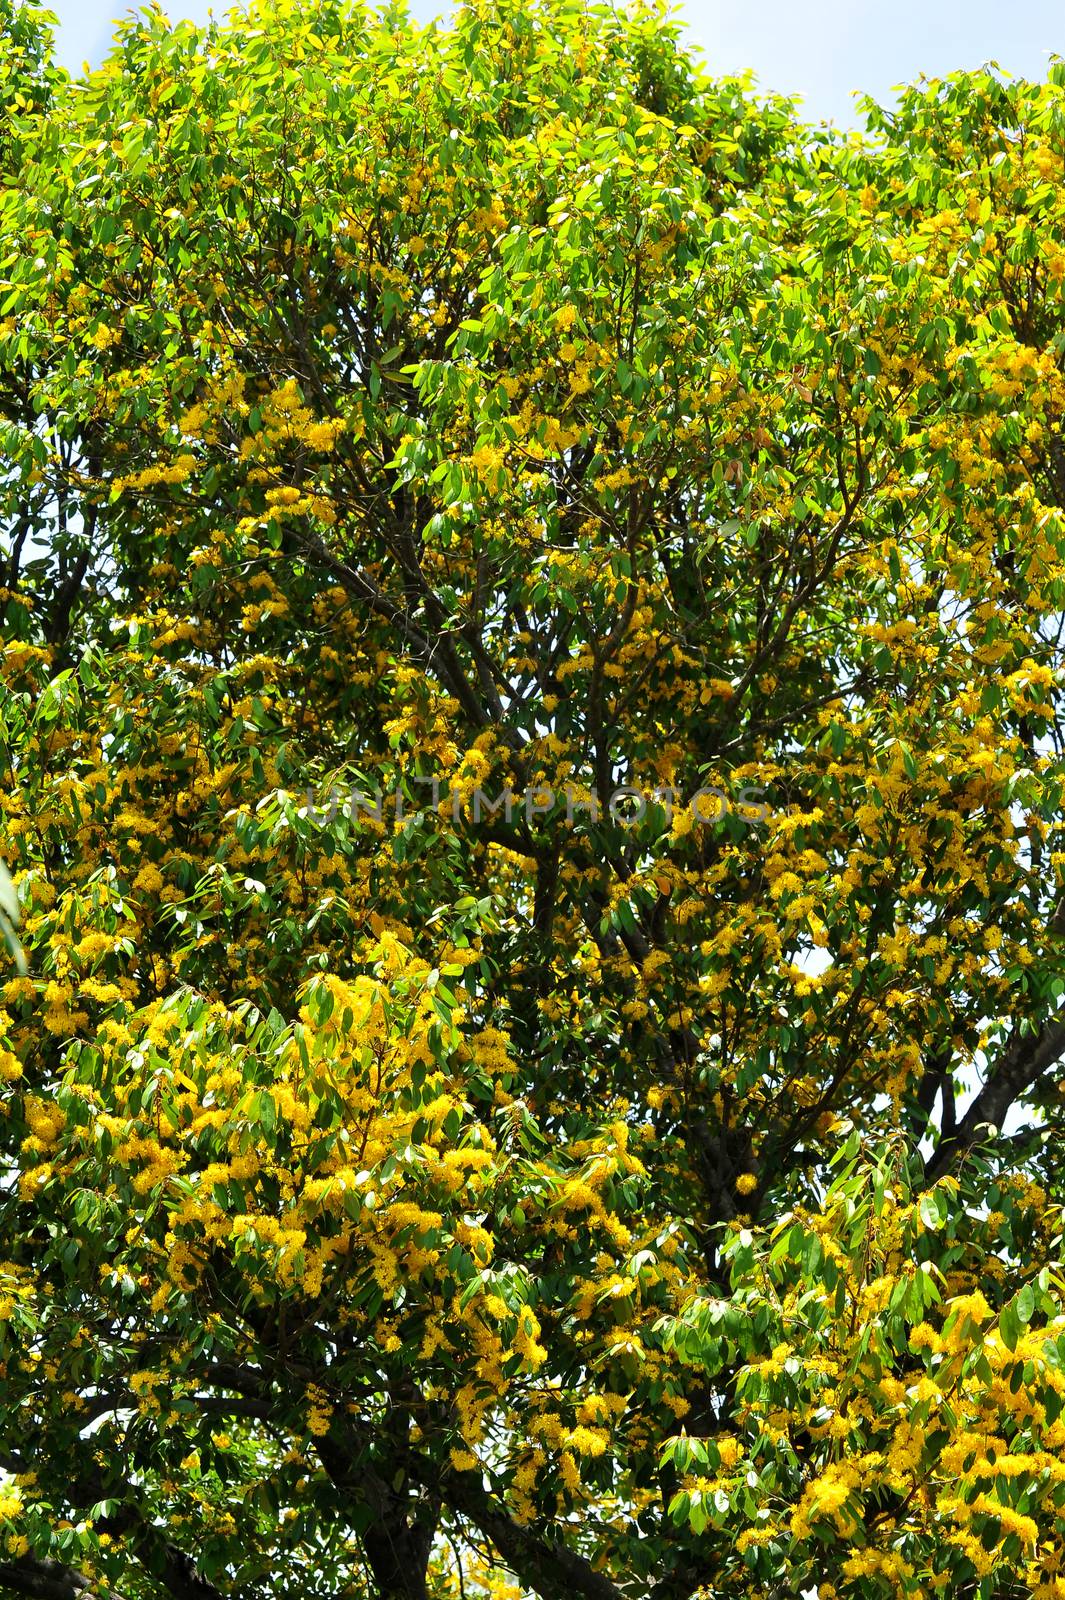 Yellow star flowers or Schoutenia glomerata King subsp.peregrina (Craib) Roekm.